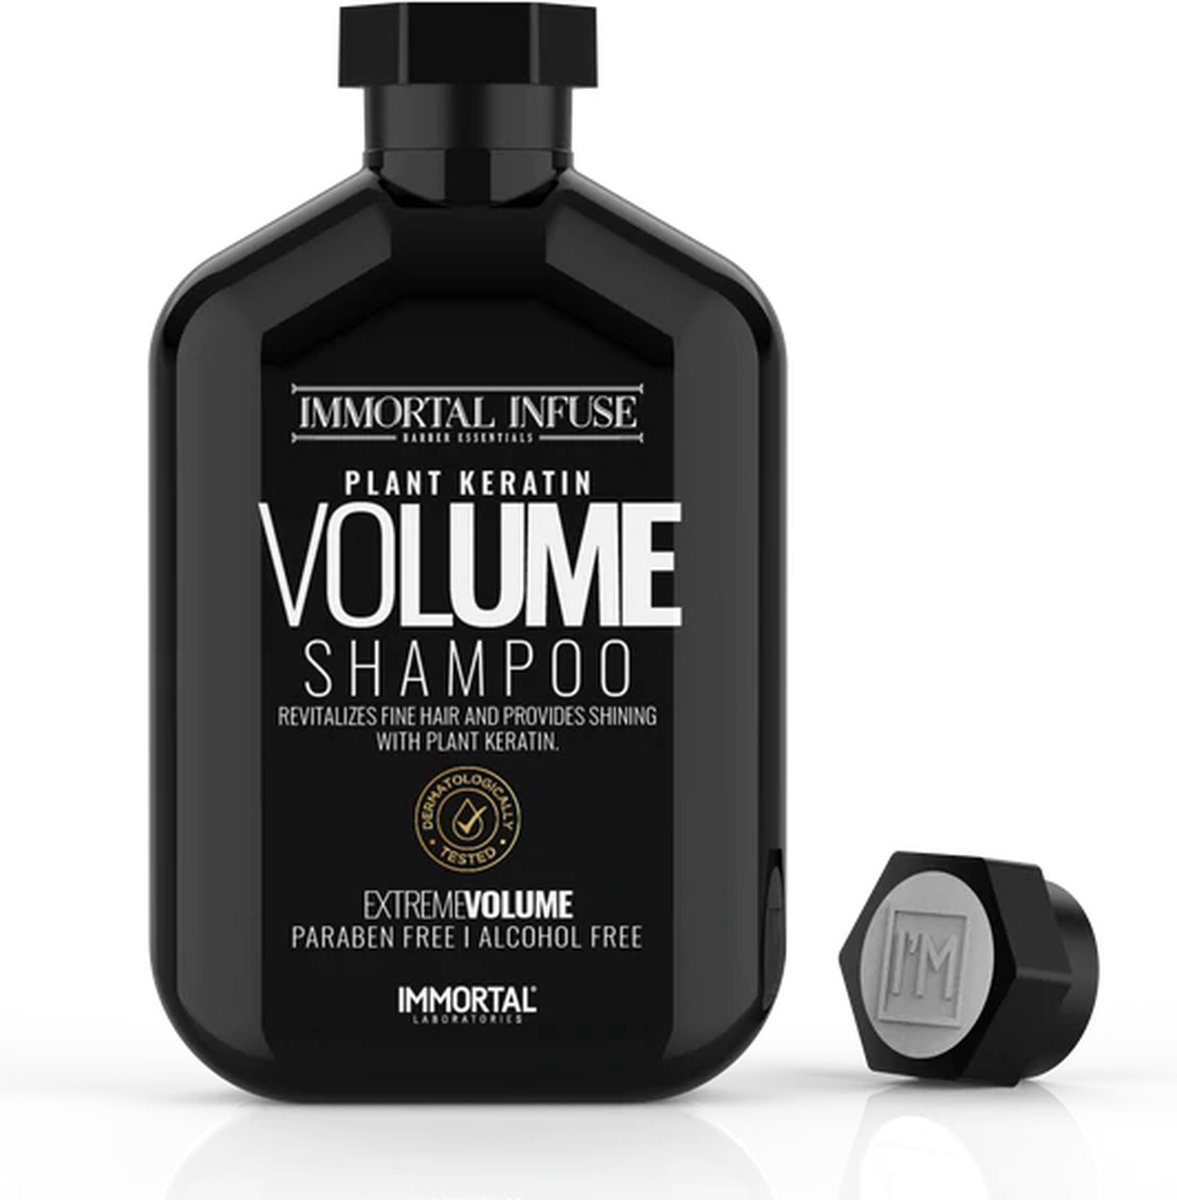 Immortal Infuse - Exclusive - Volume Shampoo 500 ml - Plant Keratine